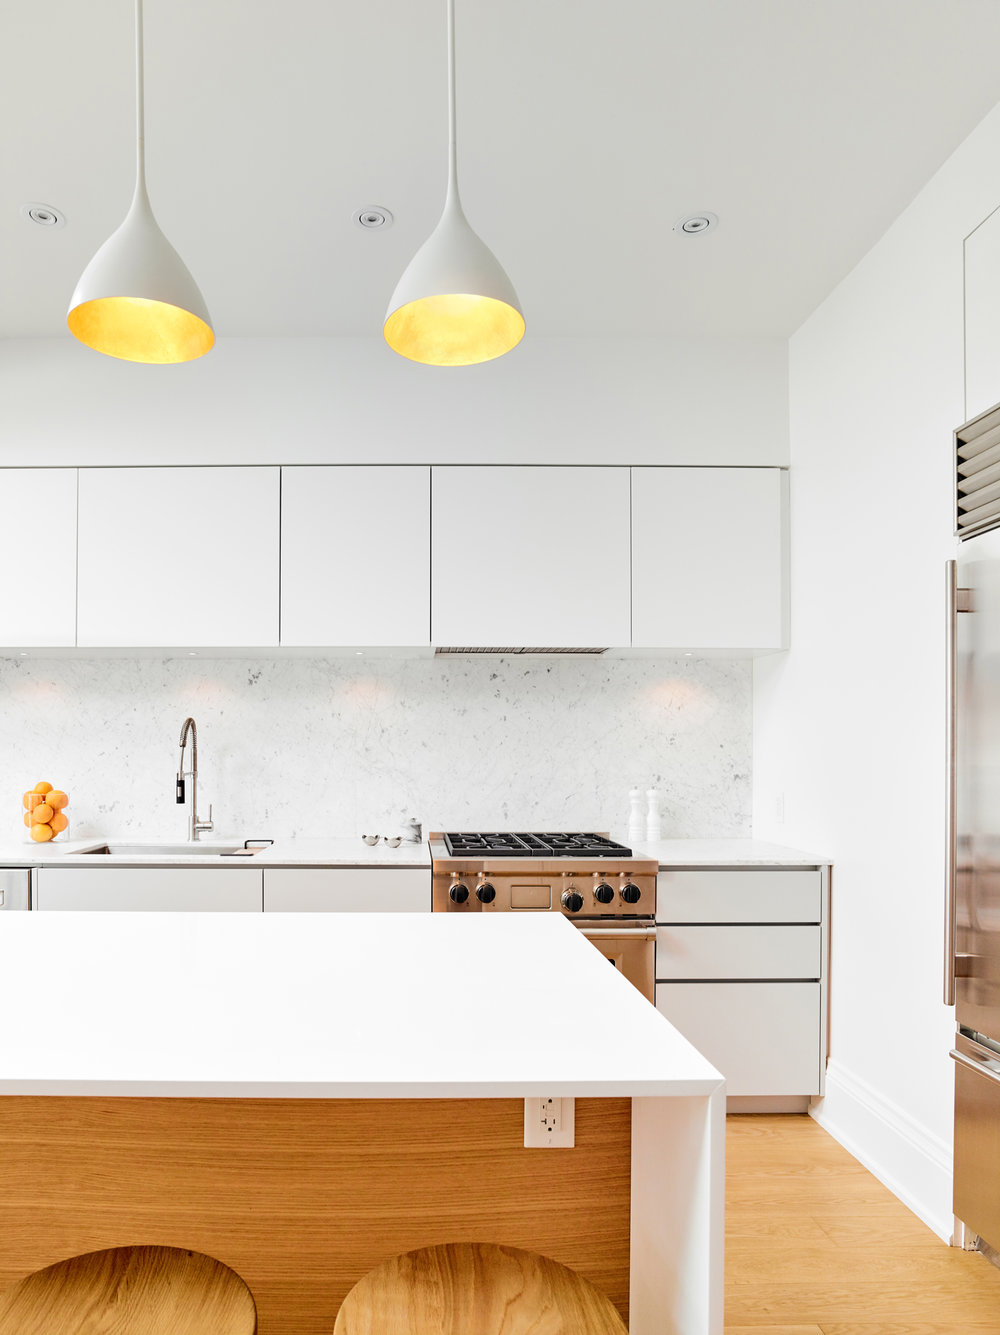 Pendants accentuate the modern minimal style of the kitchen while adding metallic sparkle